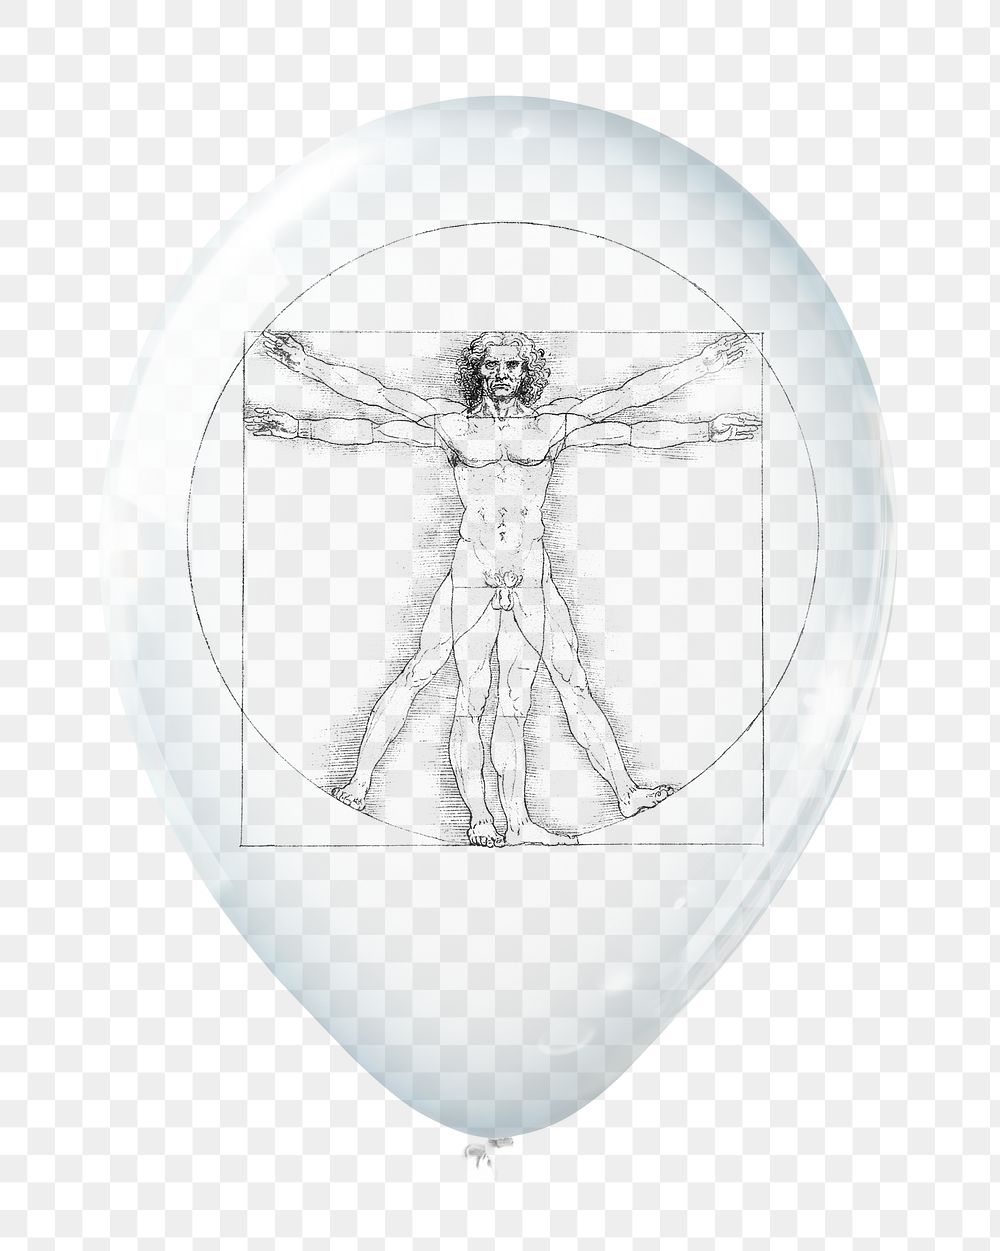 PNG Vitruvian man in clear balloon, Leonardo da Vinci's famous artwork, transparent background, remixed by rawpixel